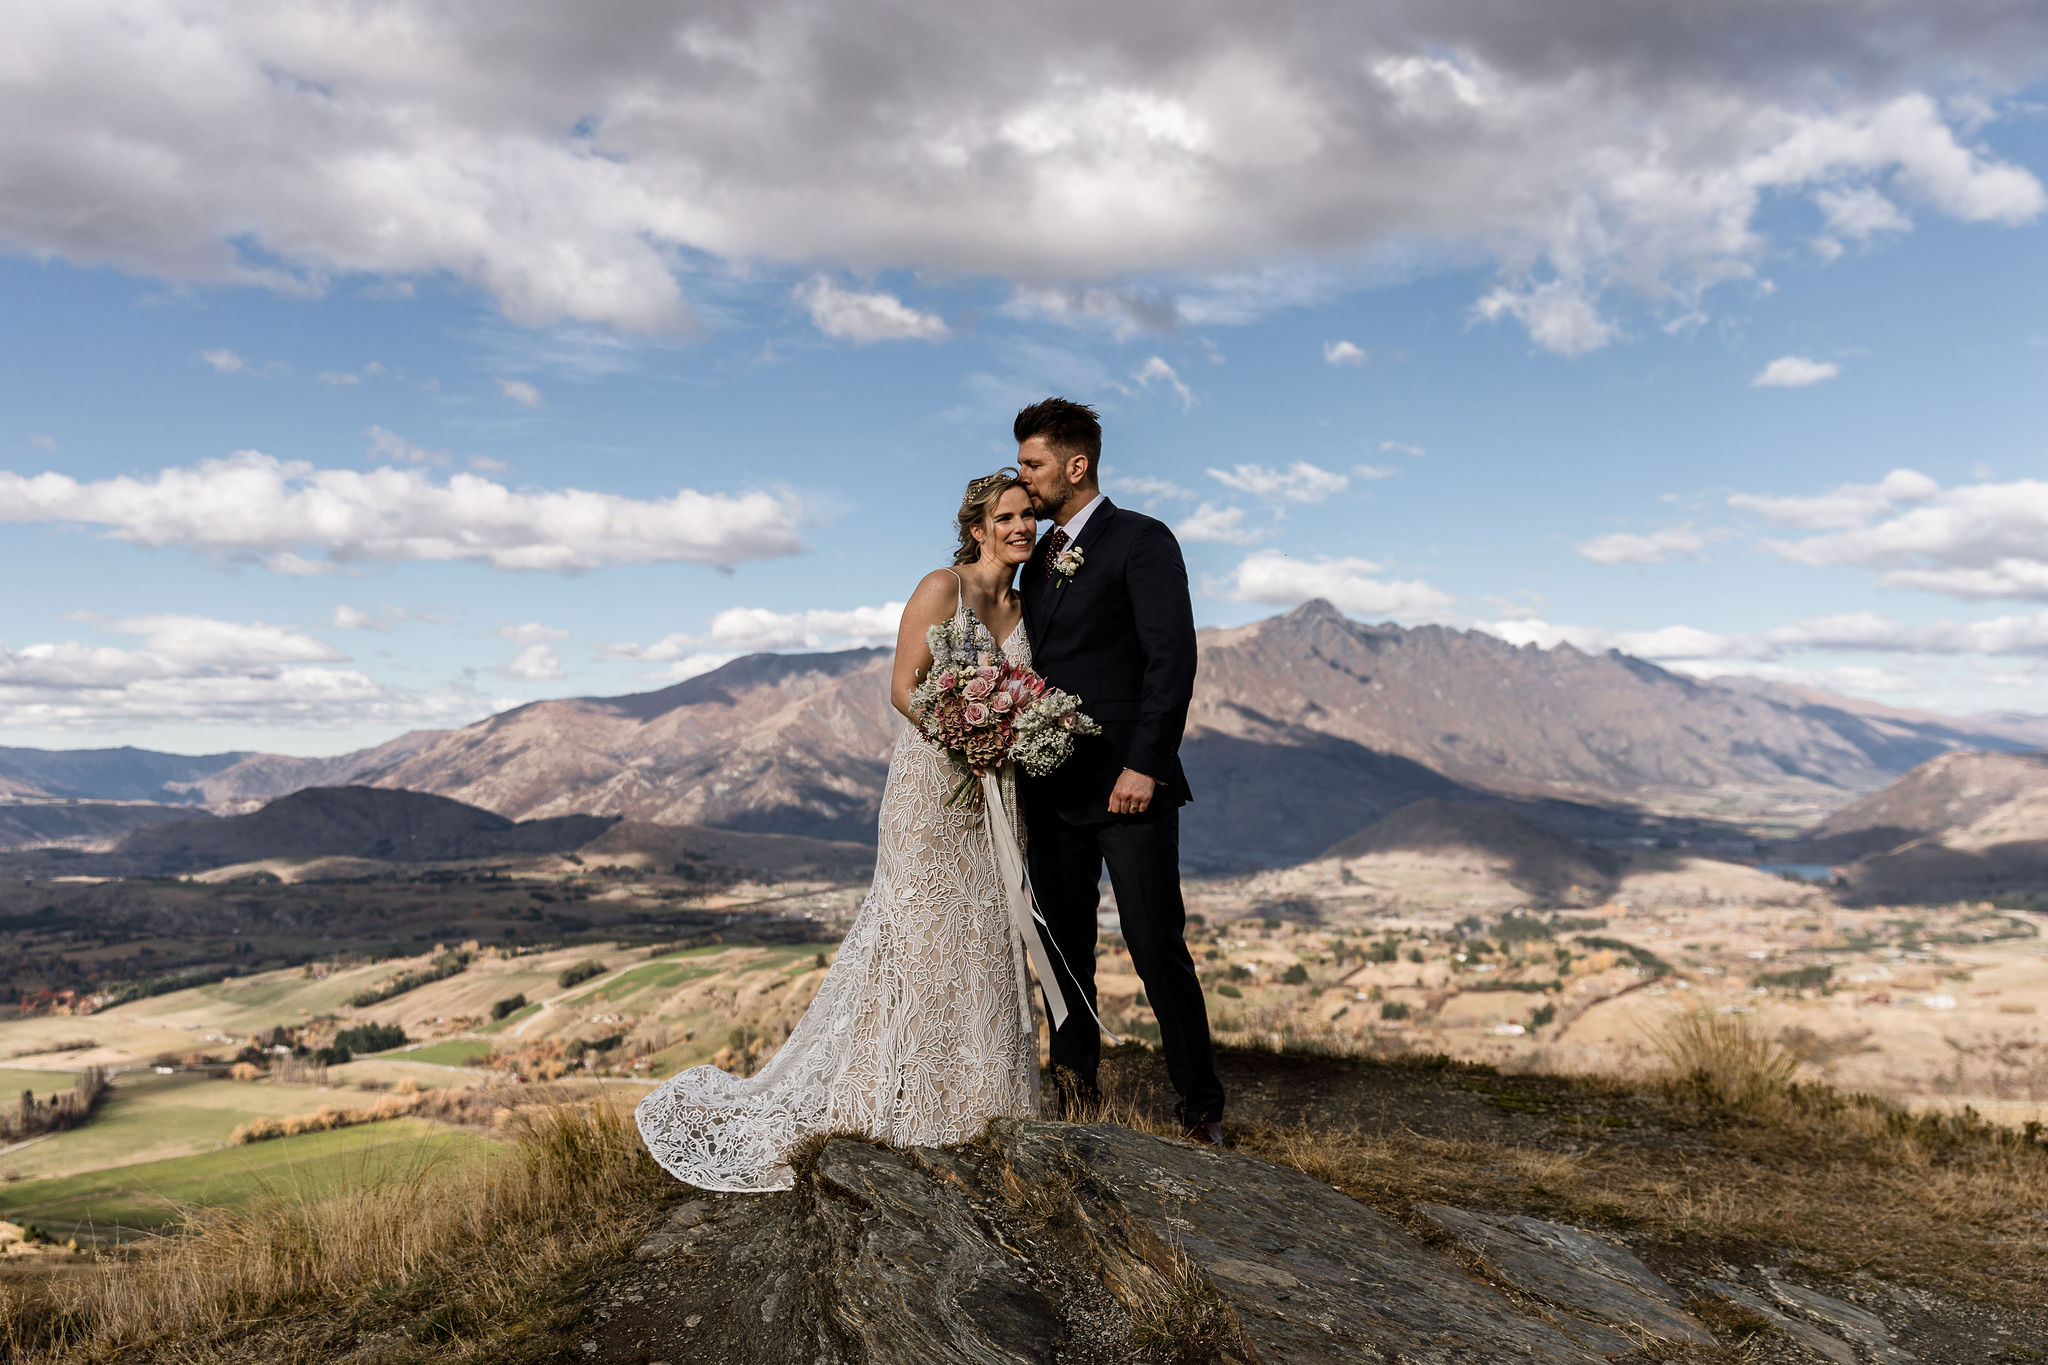 Coronet Peak - Wildly Romantic Wedding location - Susan Miller Photography